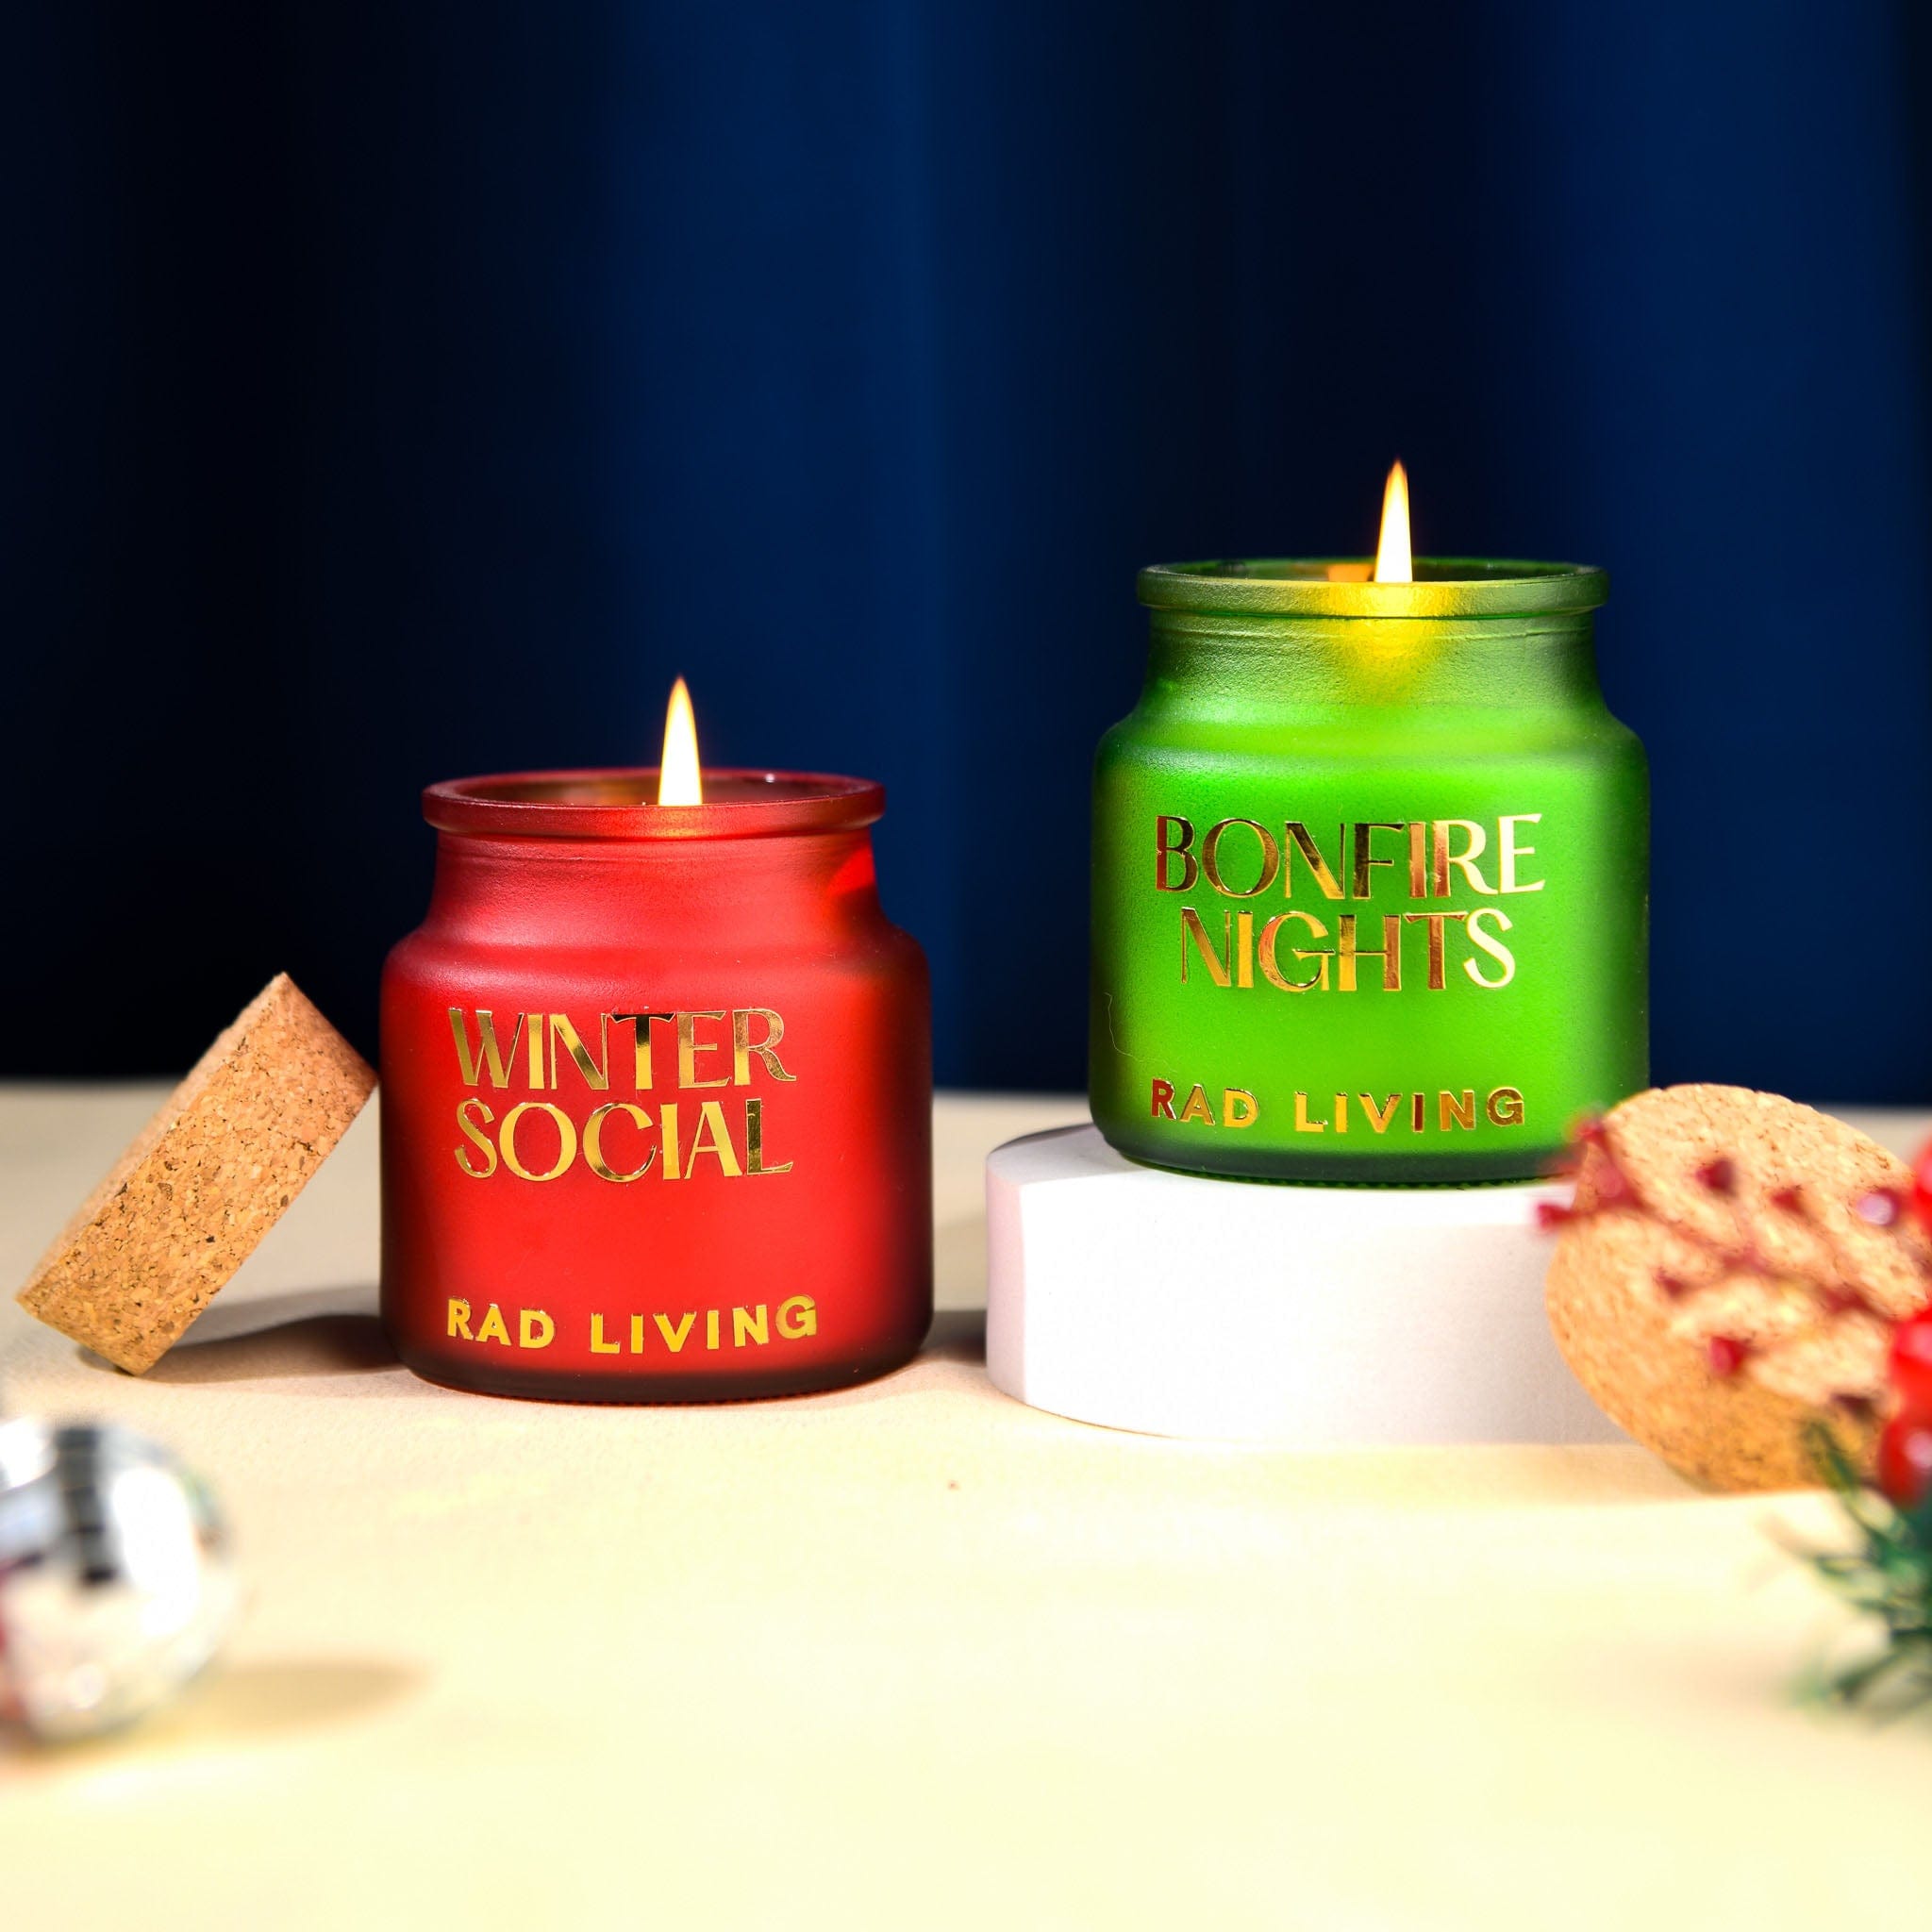 Winter Social & Bonfire Nights - Gift Set of 2 Votive Candles